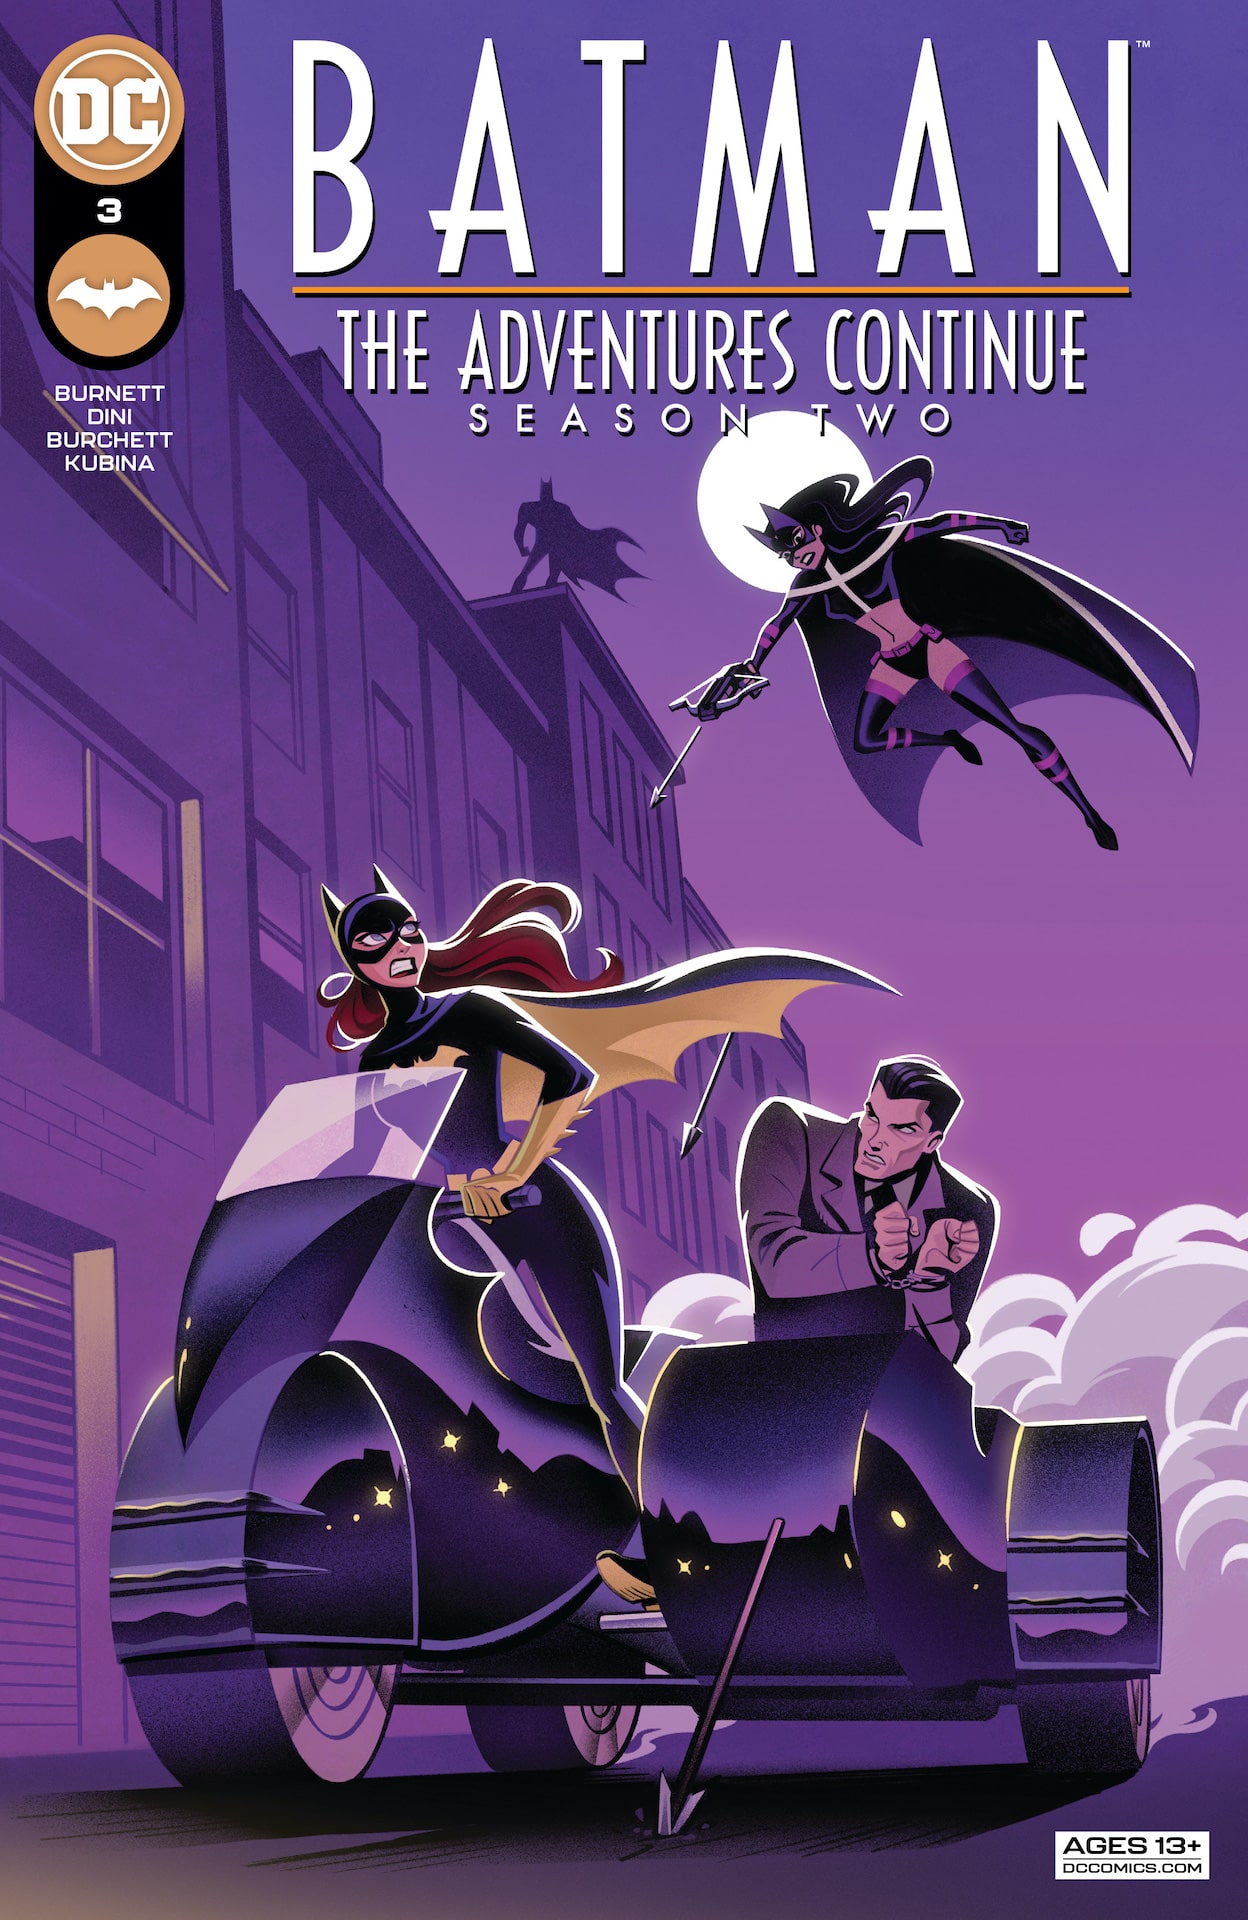 DC Preview: Batman the Adventures Continue Season Two #3